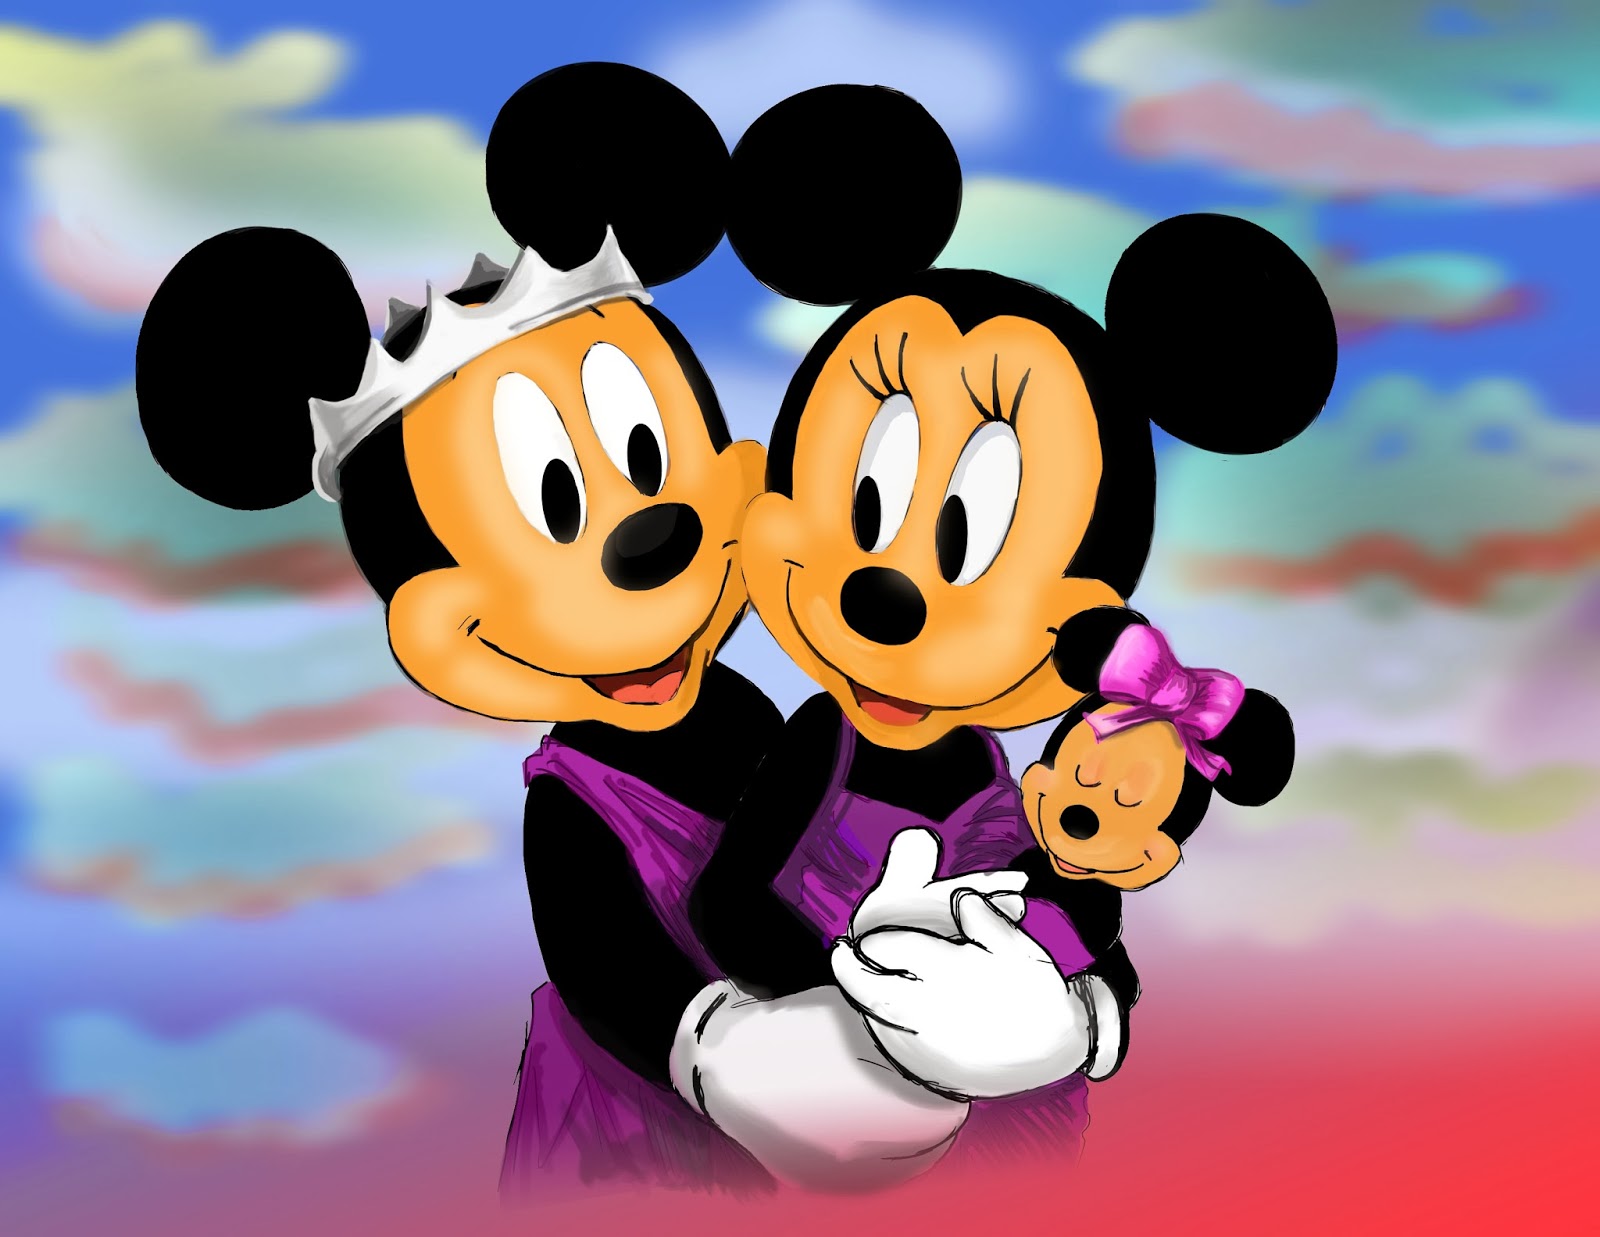 Gangsta Mickey And Minnie Mouse | Joy Studio Design ...
 Ghetto Mickey And Minnie Mouse